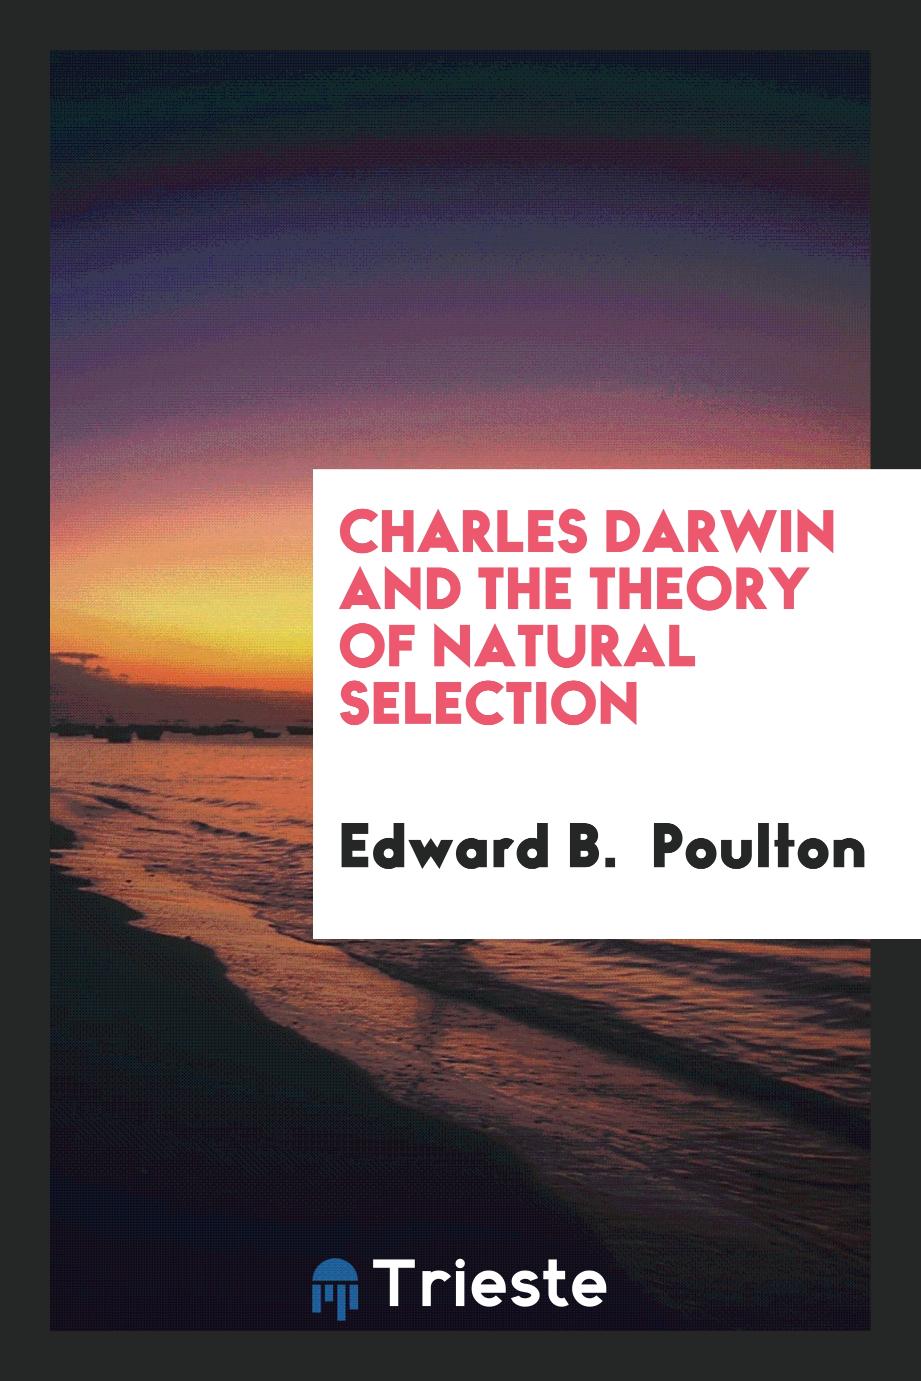 Charles Darwin and the theory of natural selection